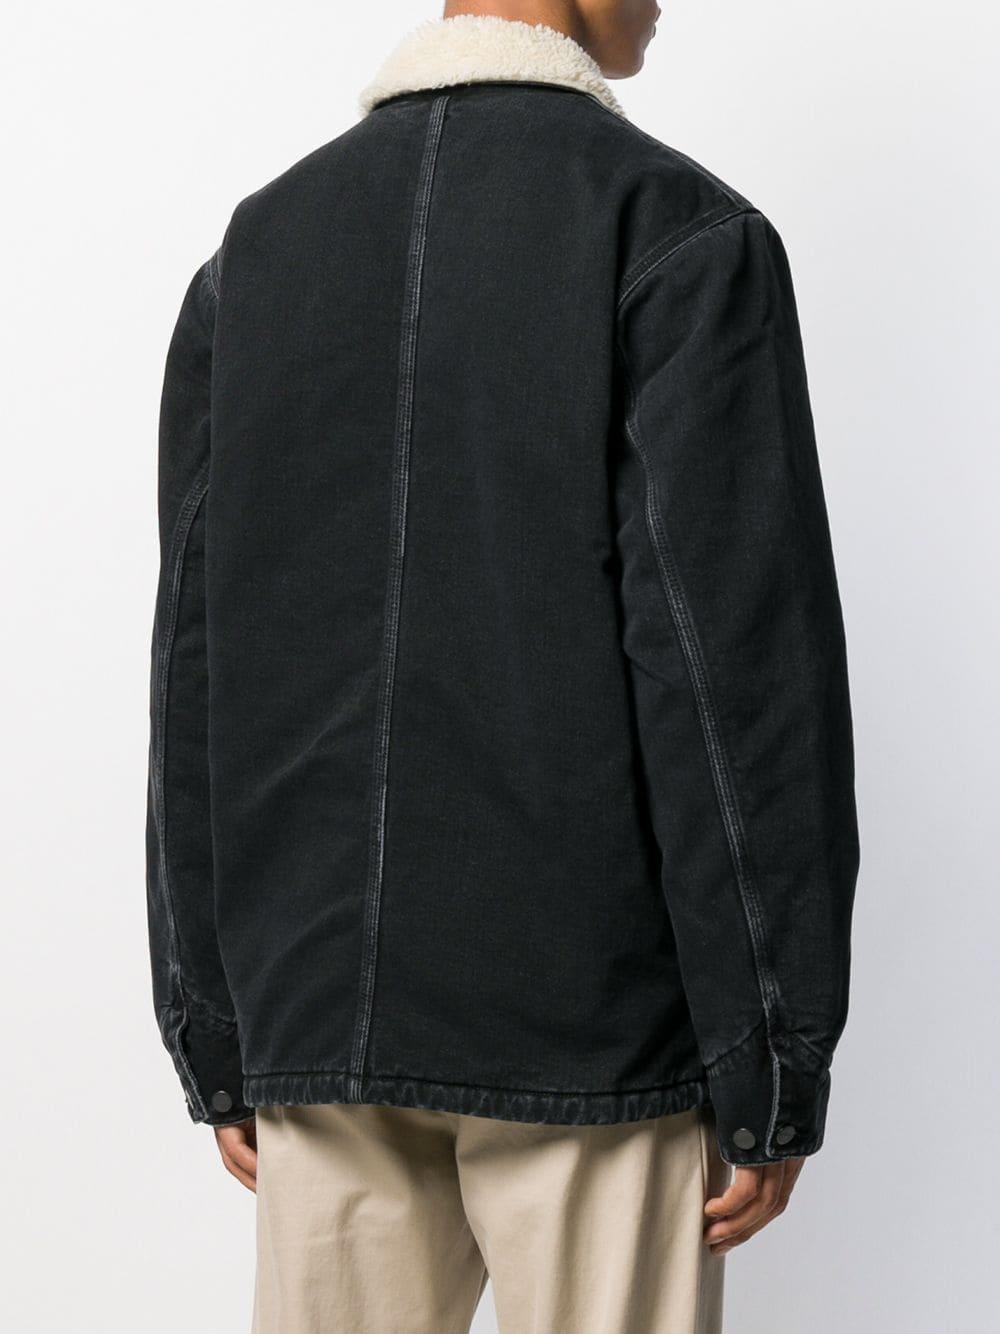 Carhartt WIP Denim Logo Patch Jacket in Black for Men - Lyst